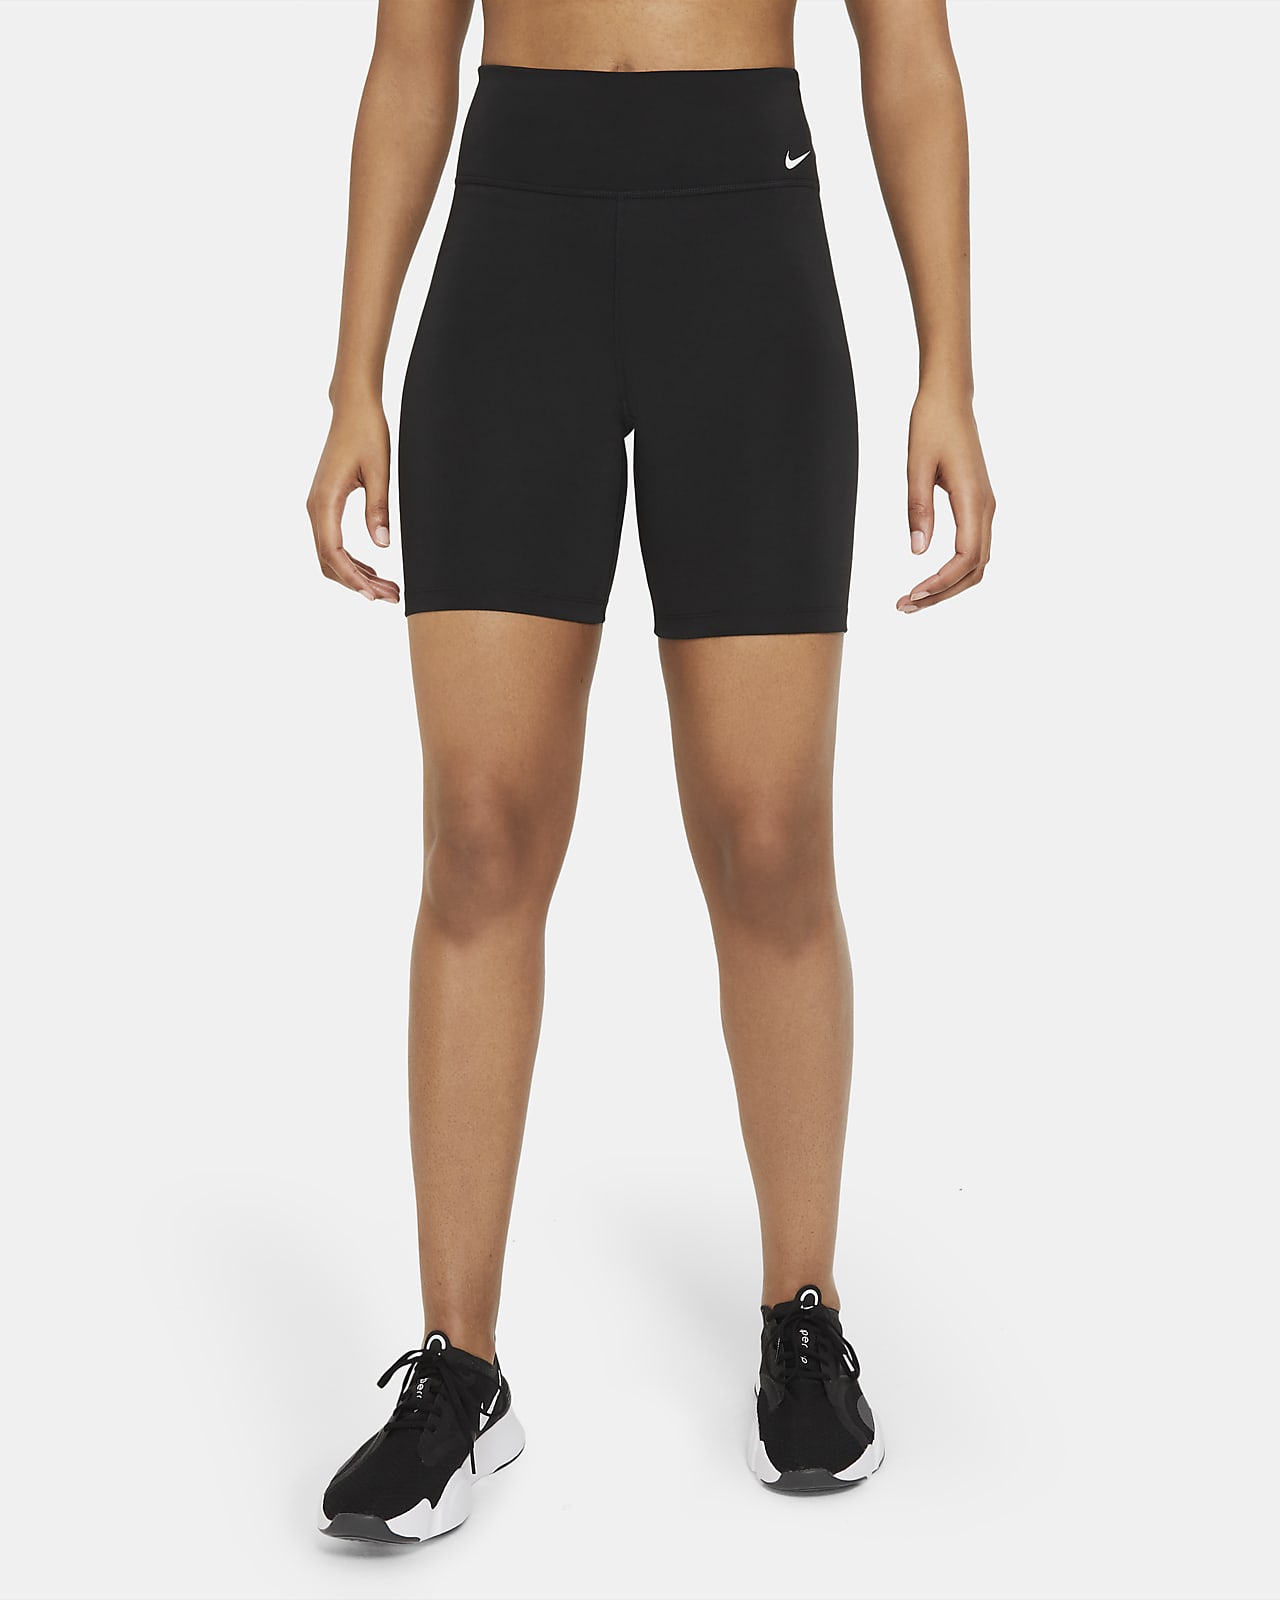 Nike One bikeshorts met halfhoge taille voor dames (18 cm)